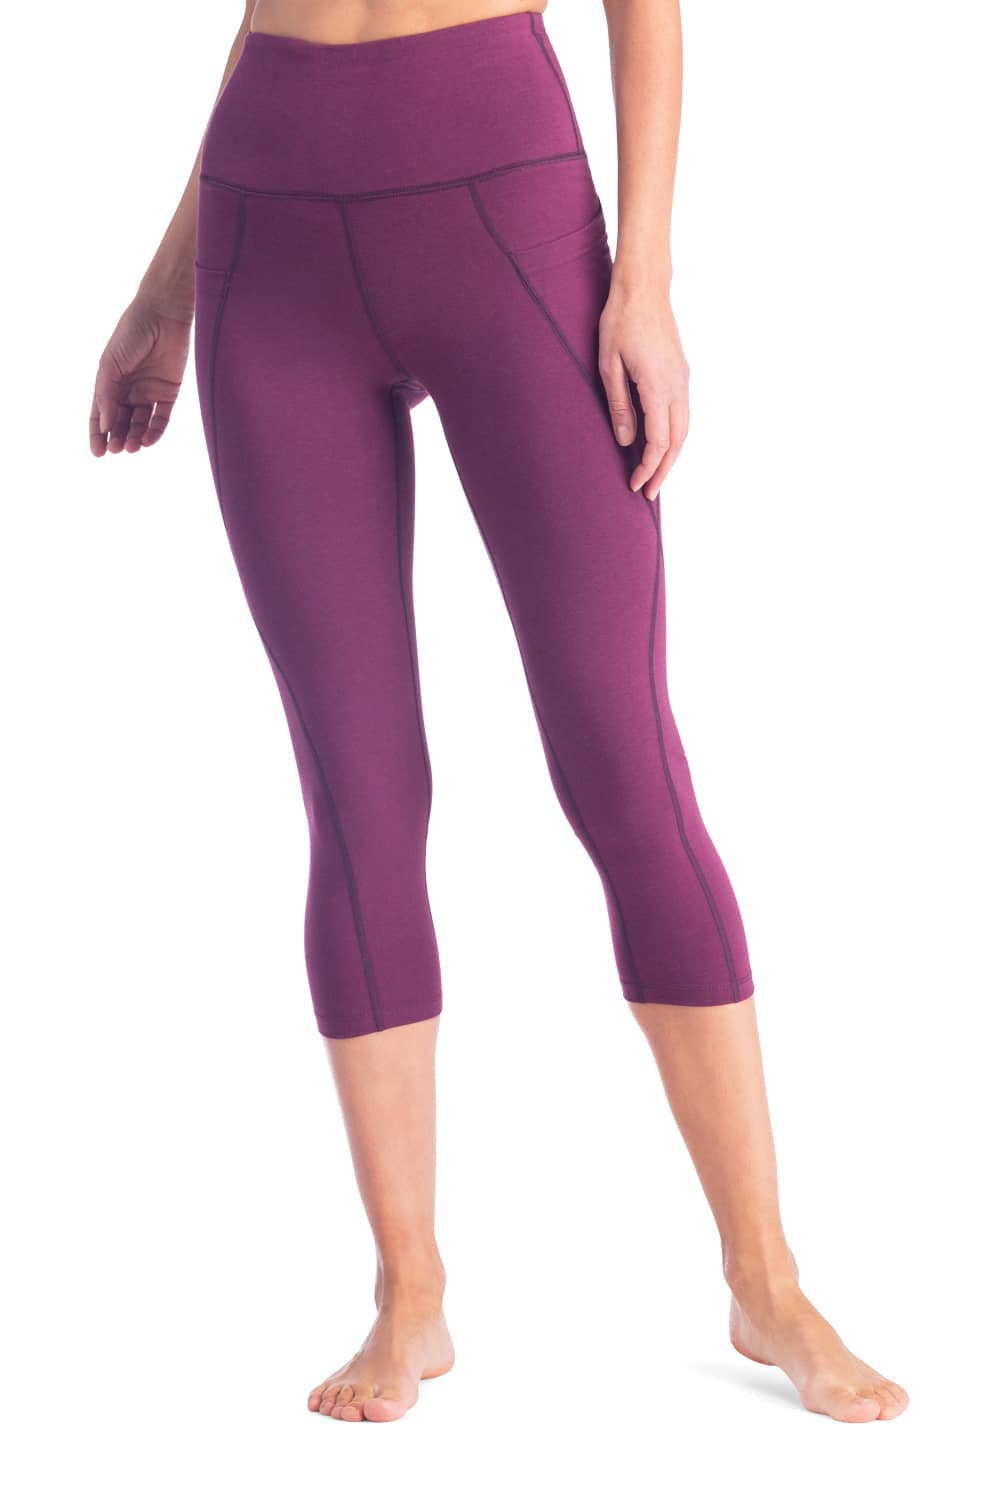 Yogalicious NWT Purple Capri Leggings Size L (Mama)